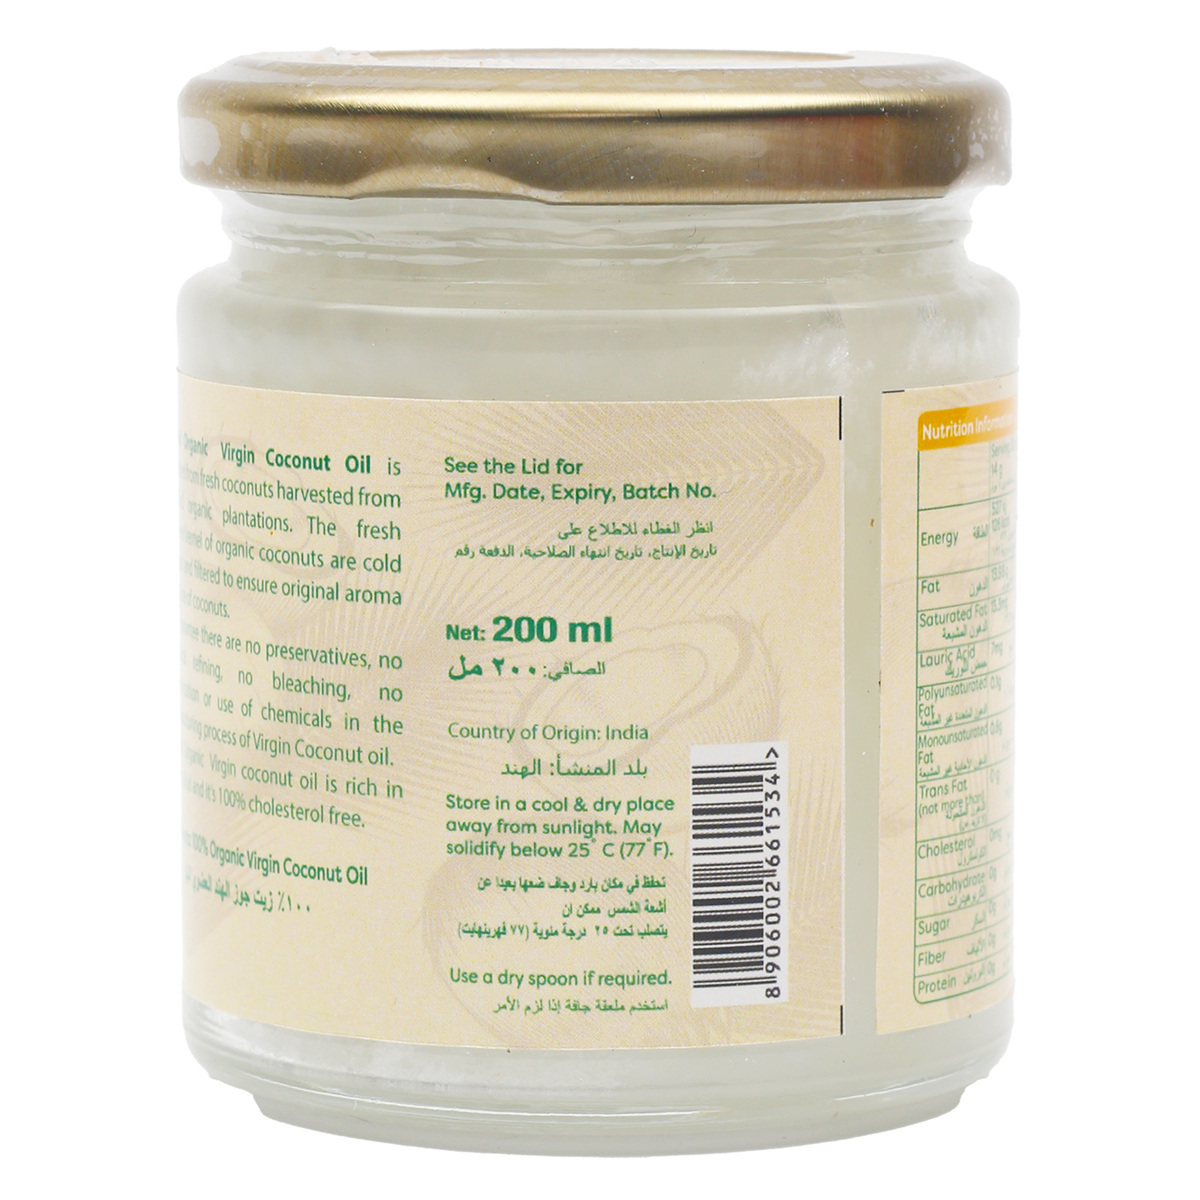 KLF Nirmal Organic Virgin Coconut Oil 200 ml